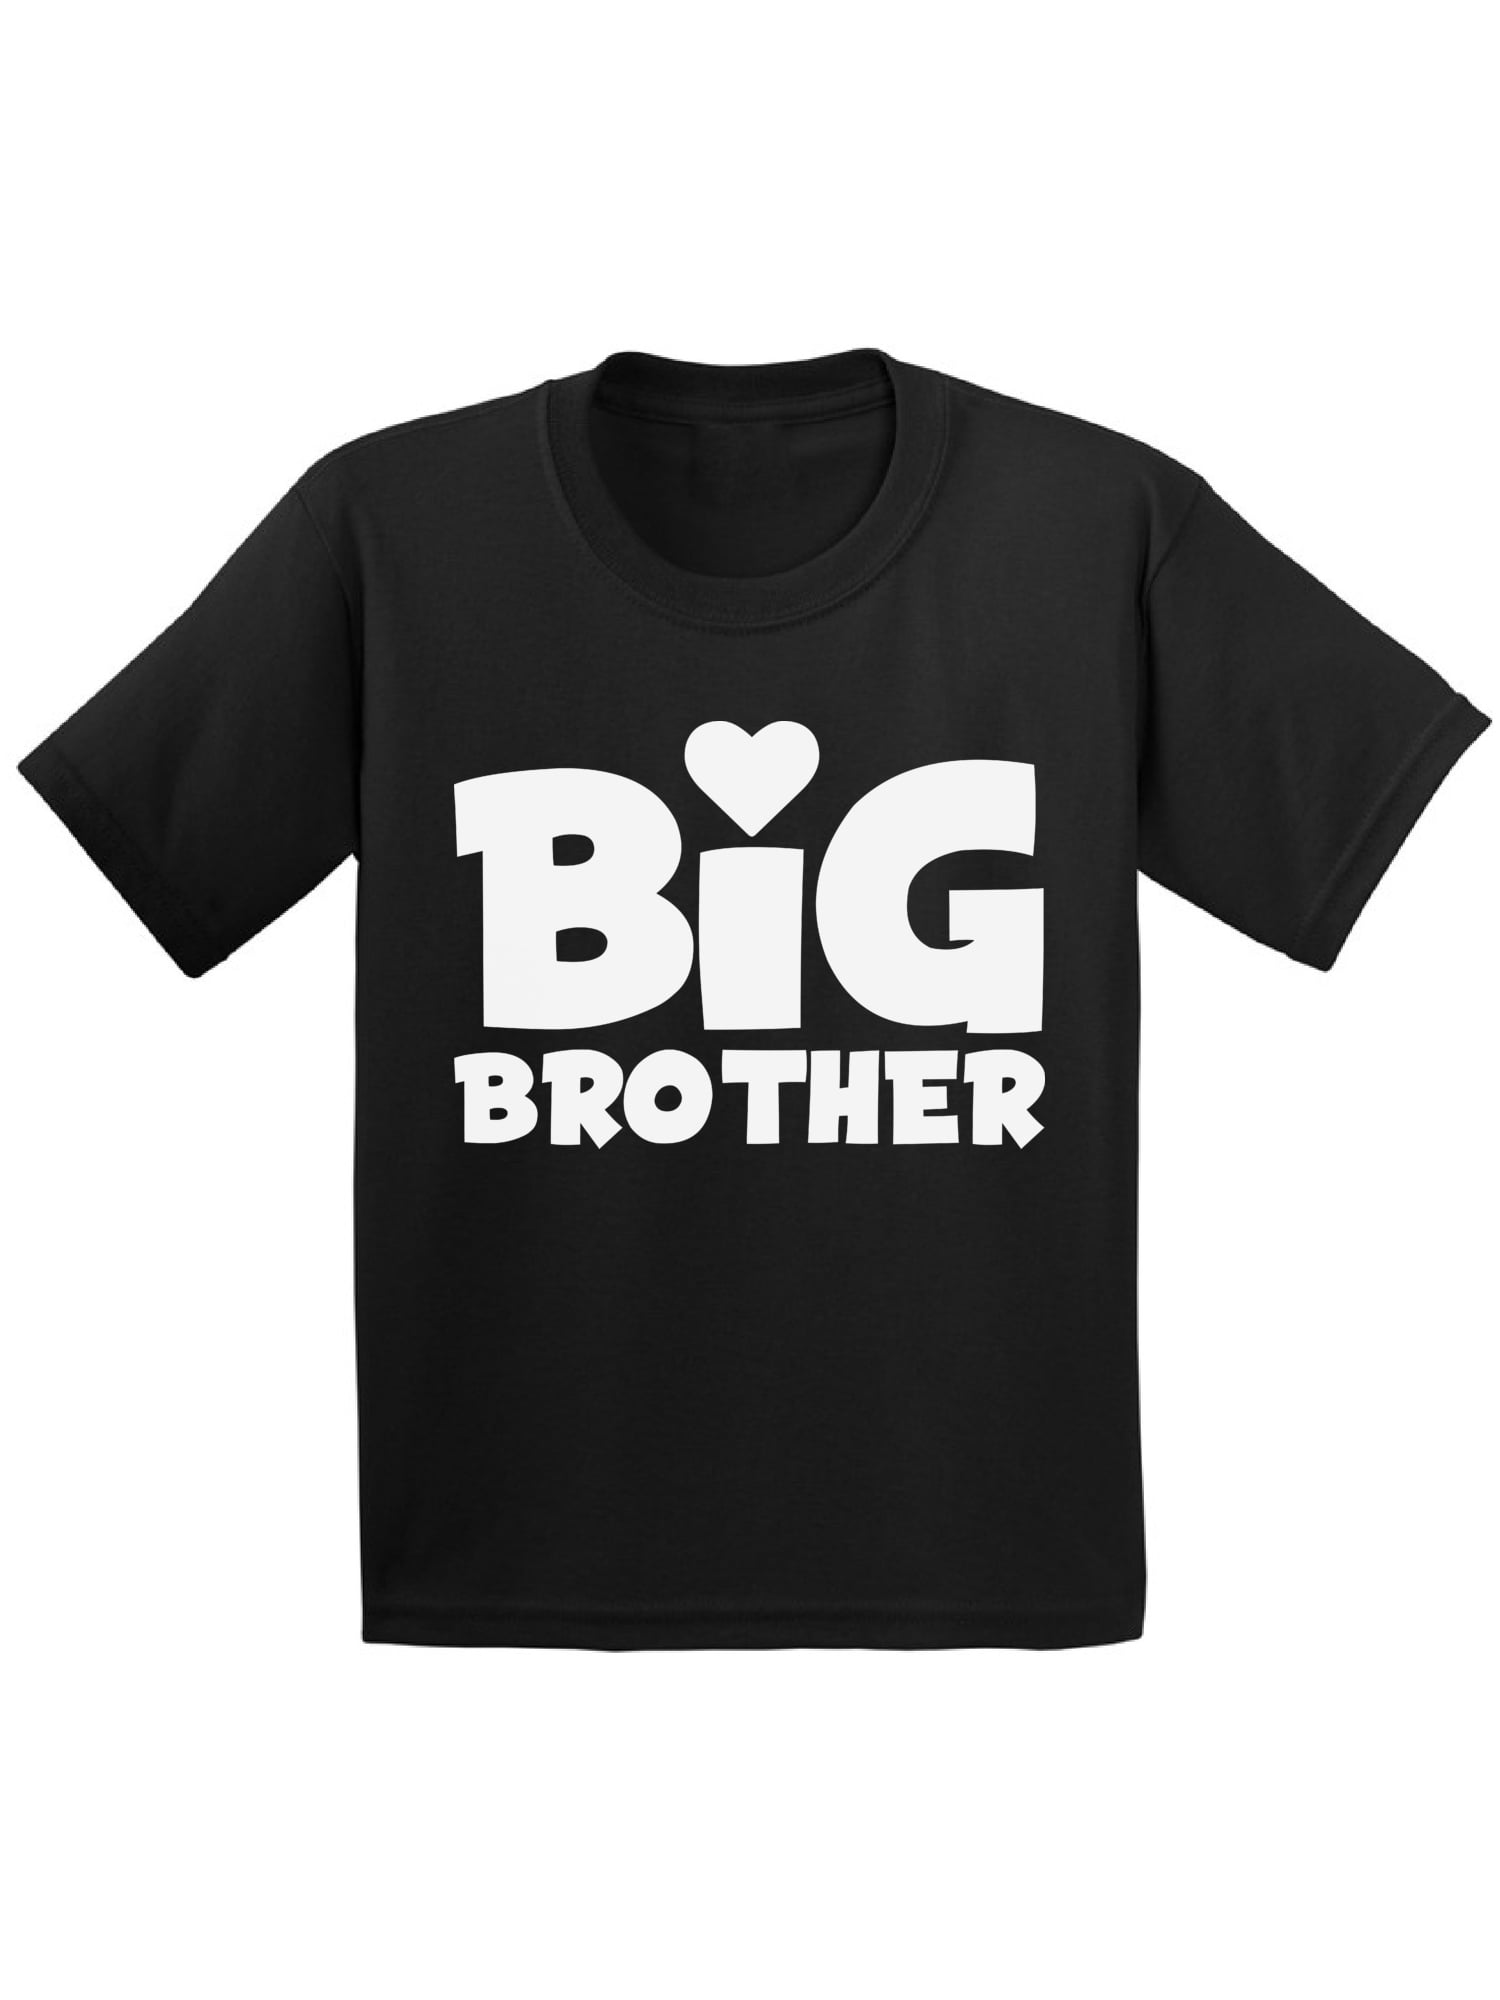 Baby Brother Shirt Baby Brother Shirt Big Brother Shirt Kleding Jongenskleding Tops & T-shirts Sibling Set Hunting Shirt Baby Announcement Big Brother shirt Deer Shirt 